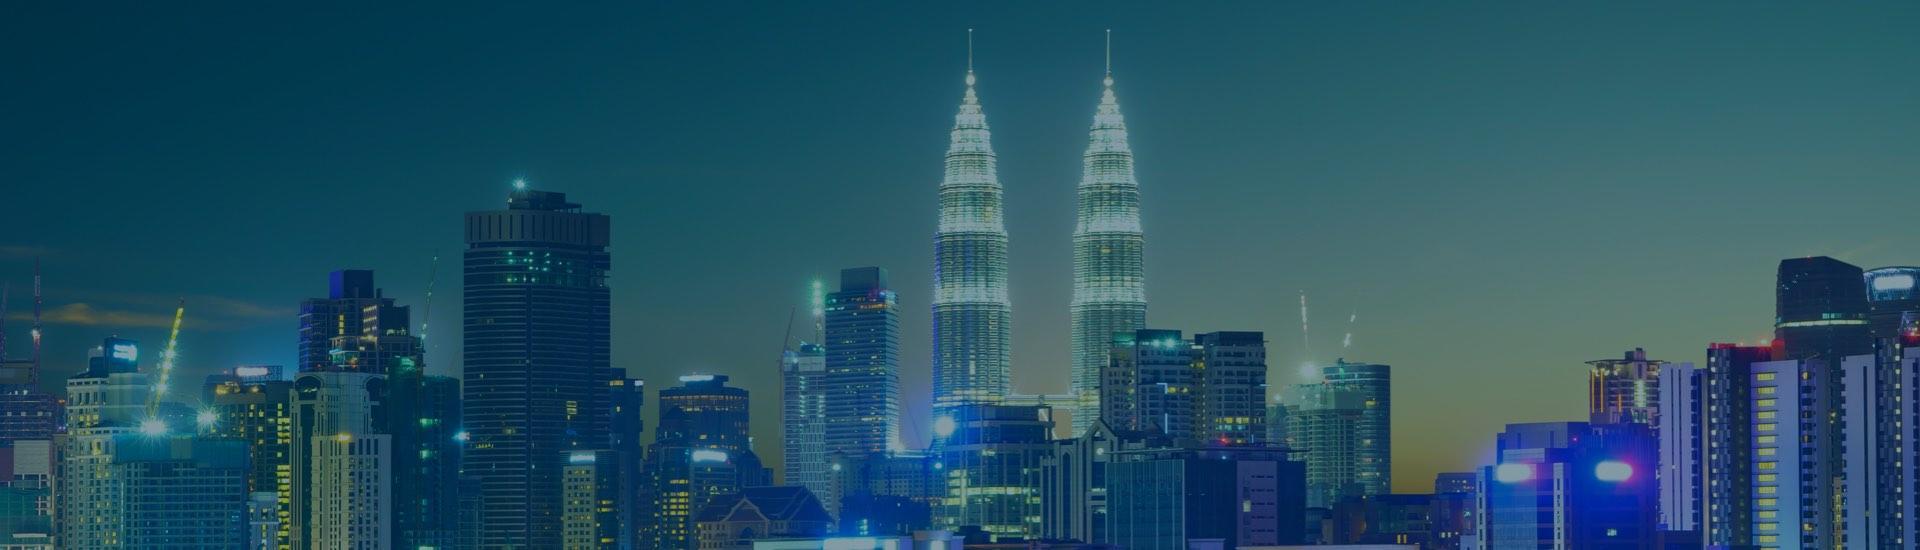 Find the Best Hotels in Kuala Lumpur